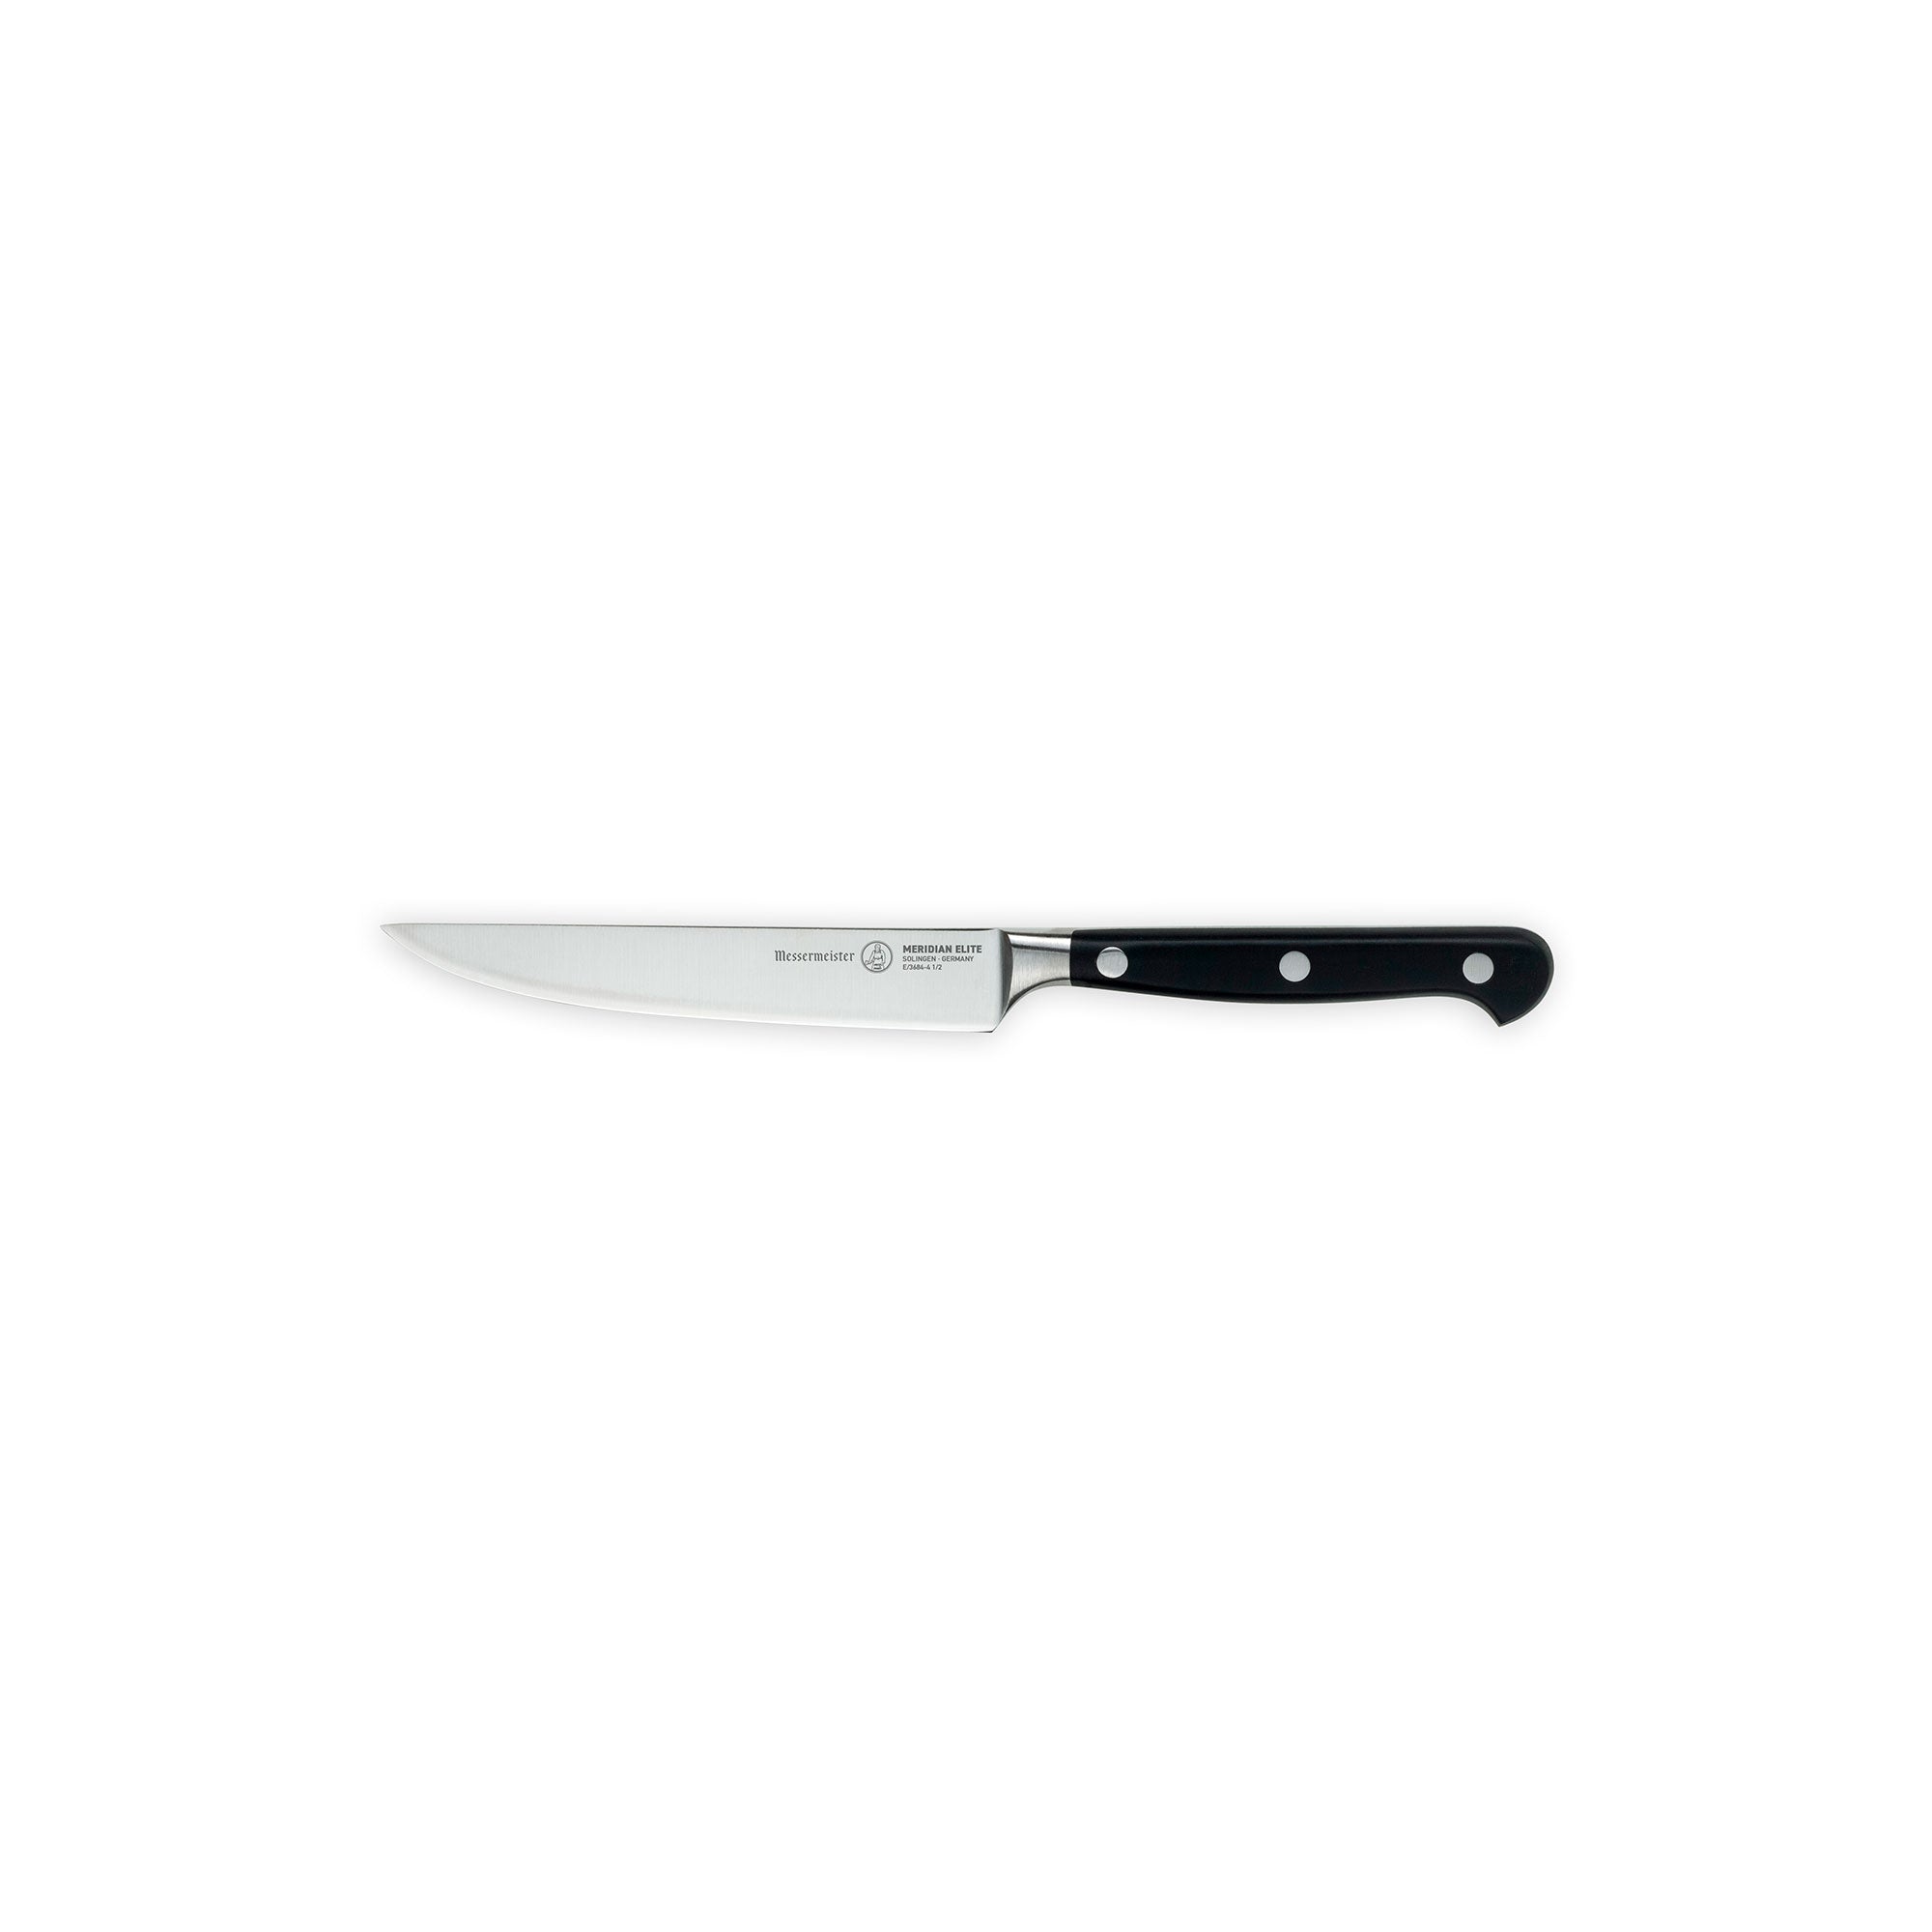  Messermeister Royale Elite 11-Piece Next Level Block Set -  Includes 6 Speciality Knives, 4 Steak Knives & Knife Block: Garnishing  Knives: Home & Kitchen